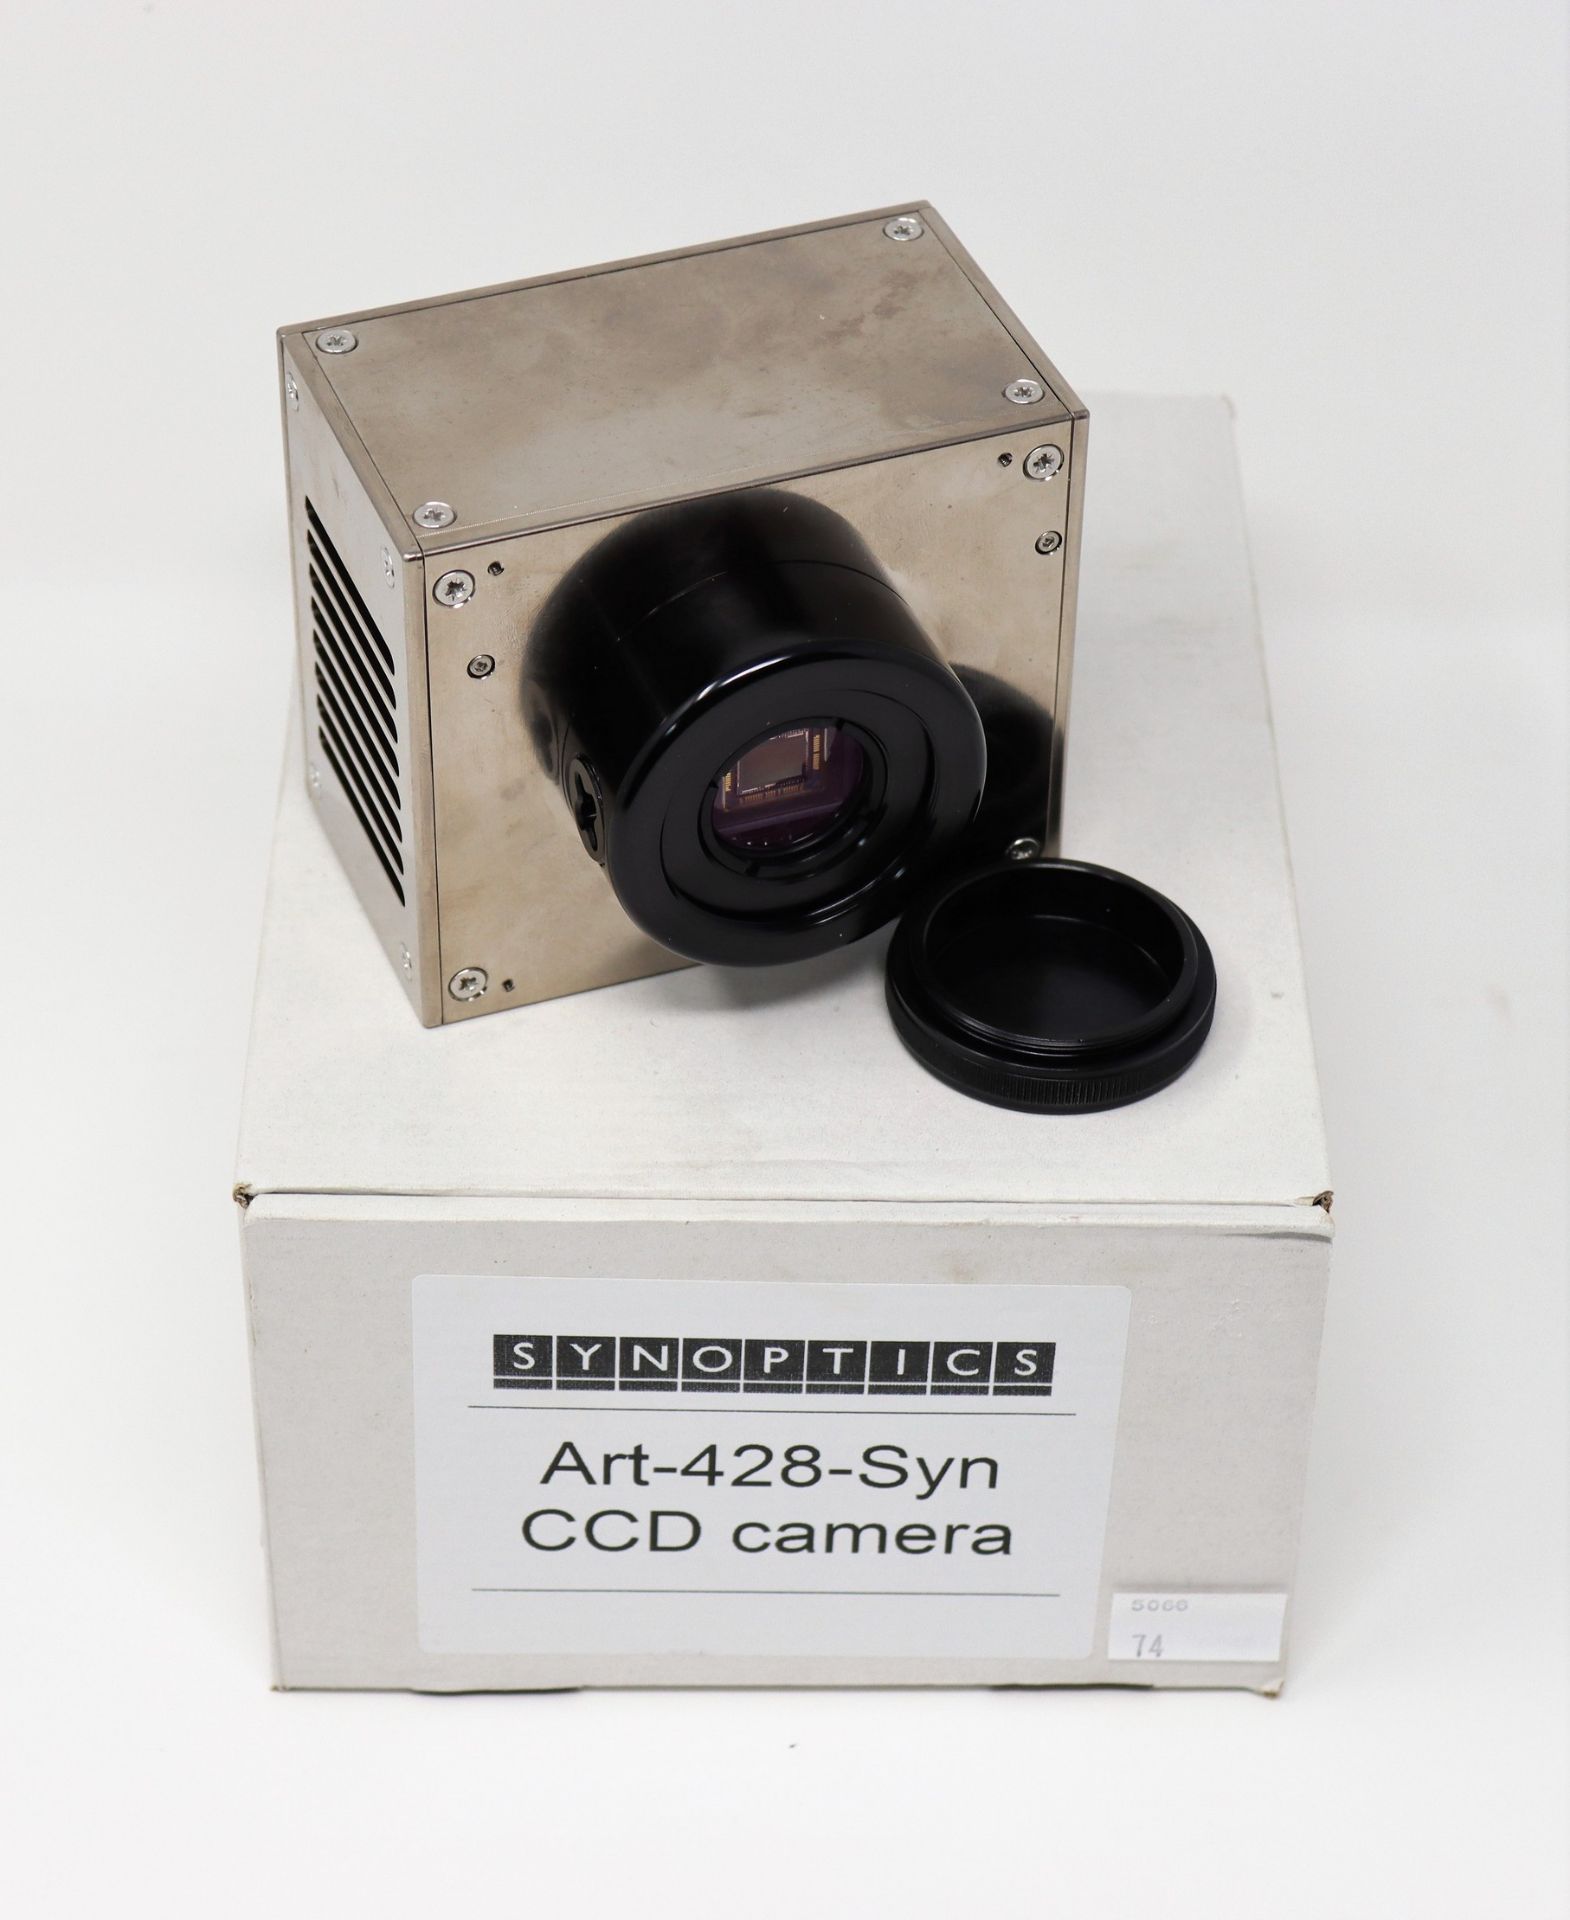 A boxed as new Synoptics Art-428-Syn CCD Camera.